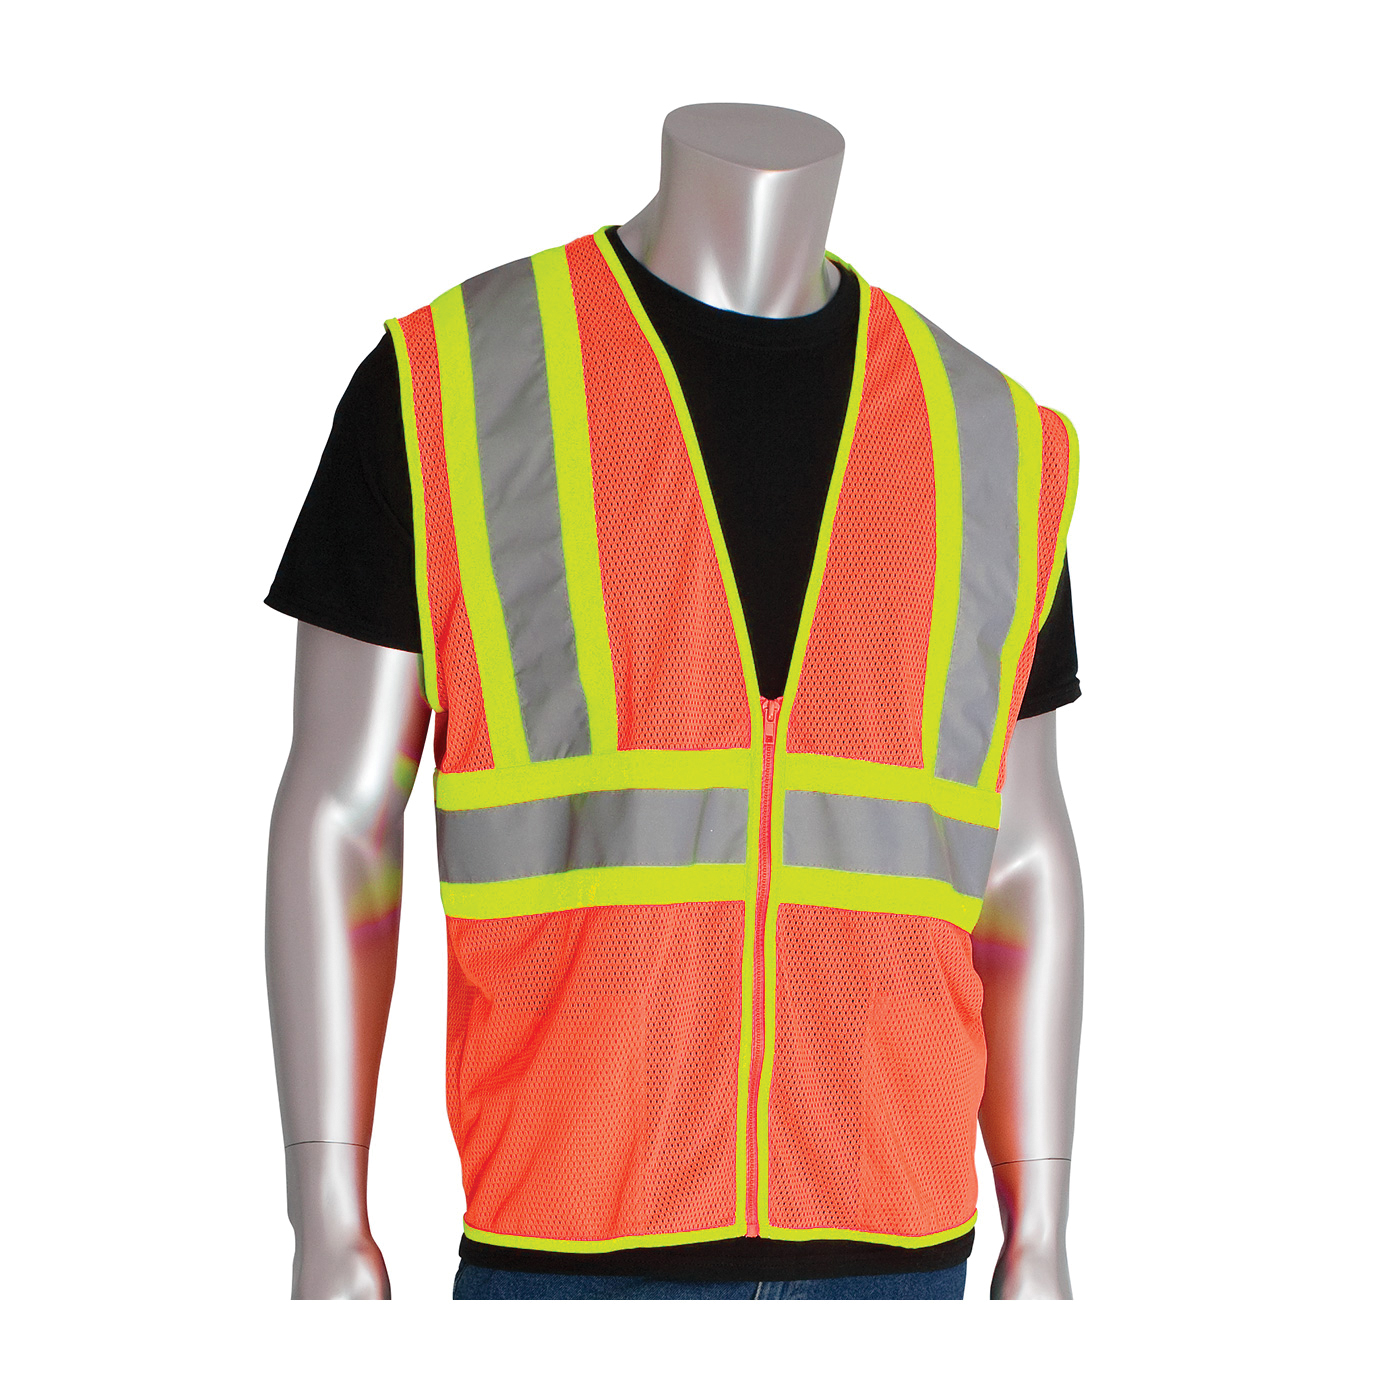 PIP® 302-MVOR-3X 2-Tone Safety Vest, 3XL, Hi-Viz Orange, Polyester Mesh, Zipper Closure, 2 Pockets, ANSI Class: Class 2, Specifications Met: ANSI 107 Type R